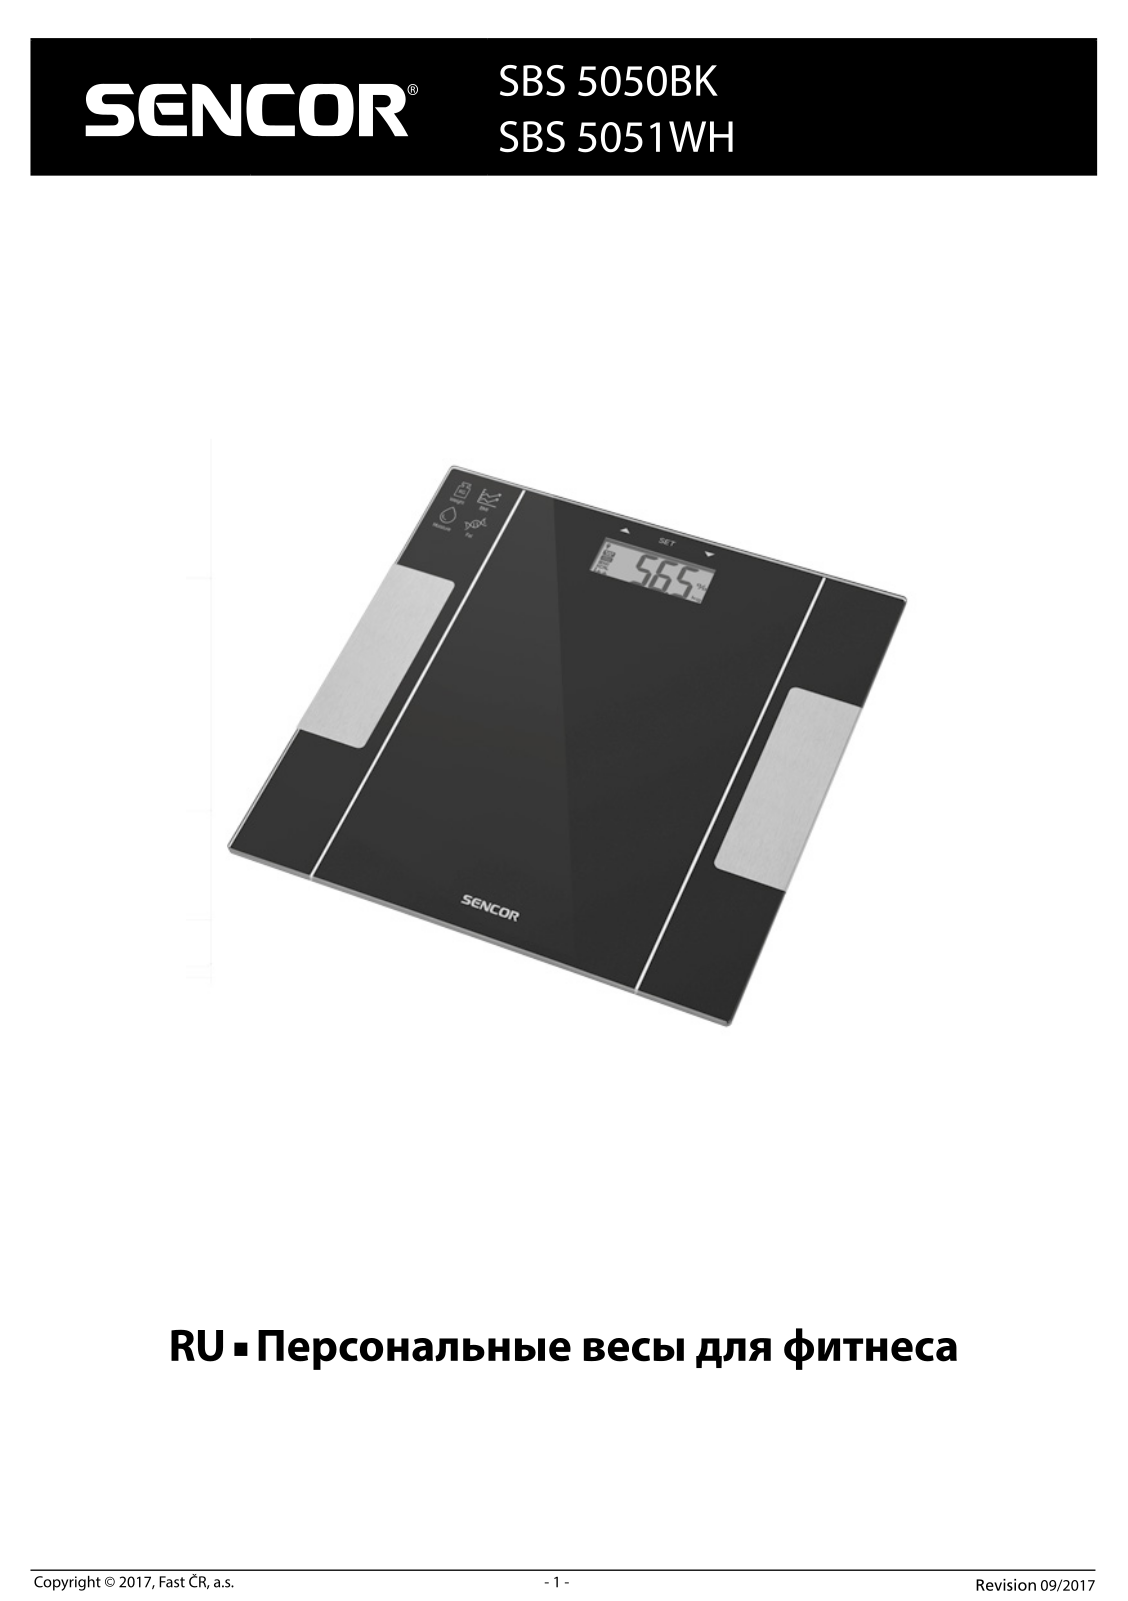 Sencor SBS 5050BK User Manual